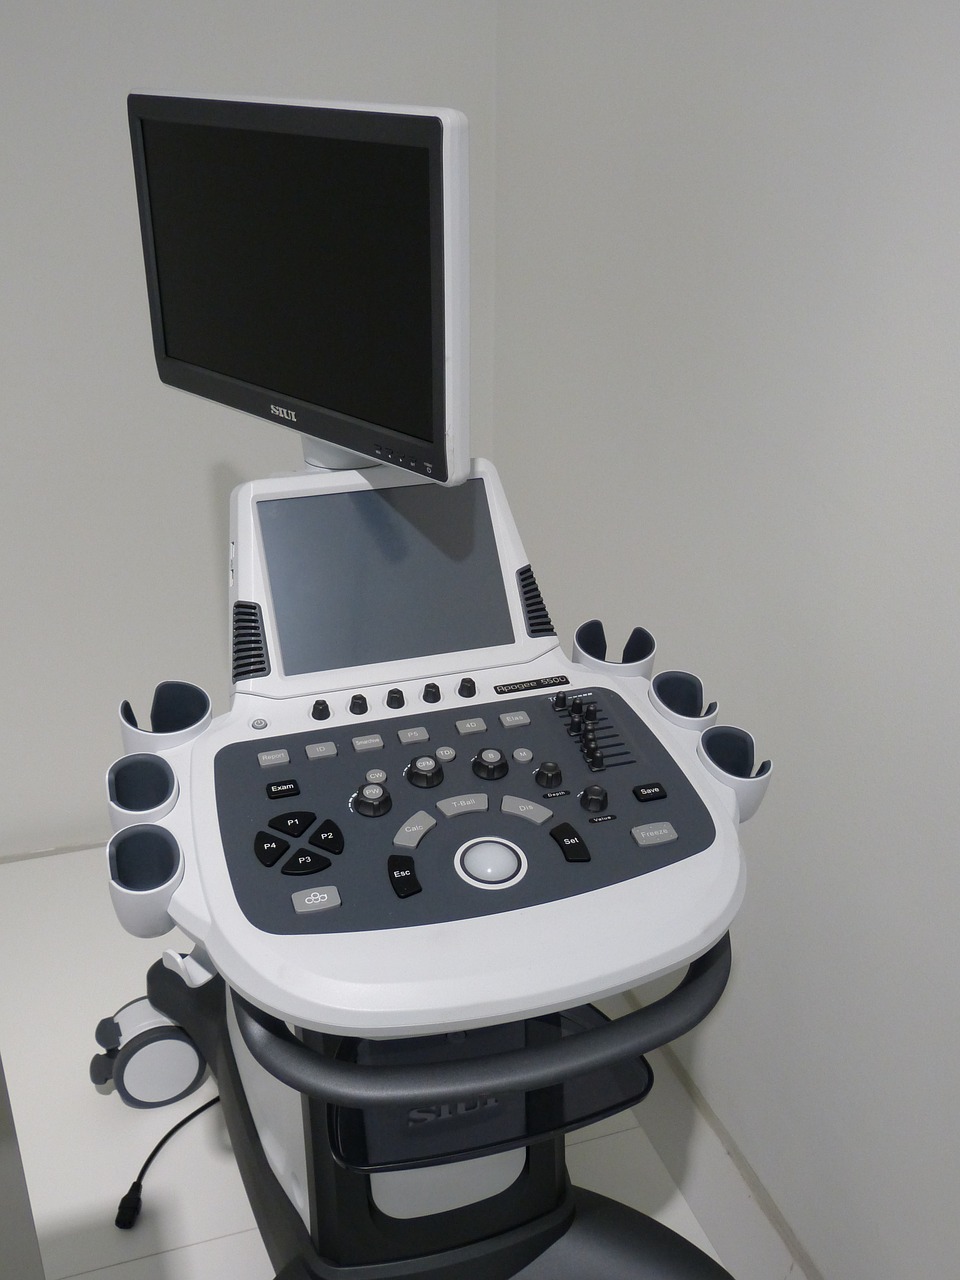 Penarafan mesin ultrasound terbaik untuk tahun 2020